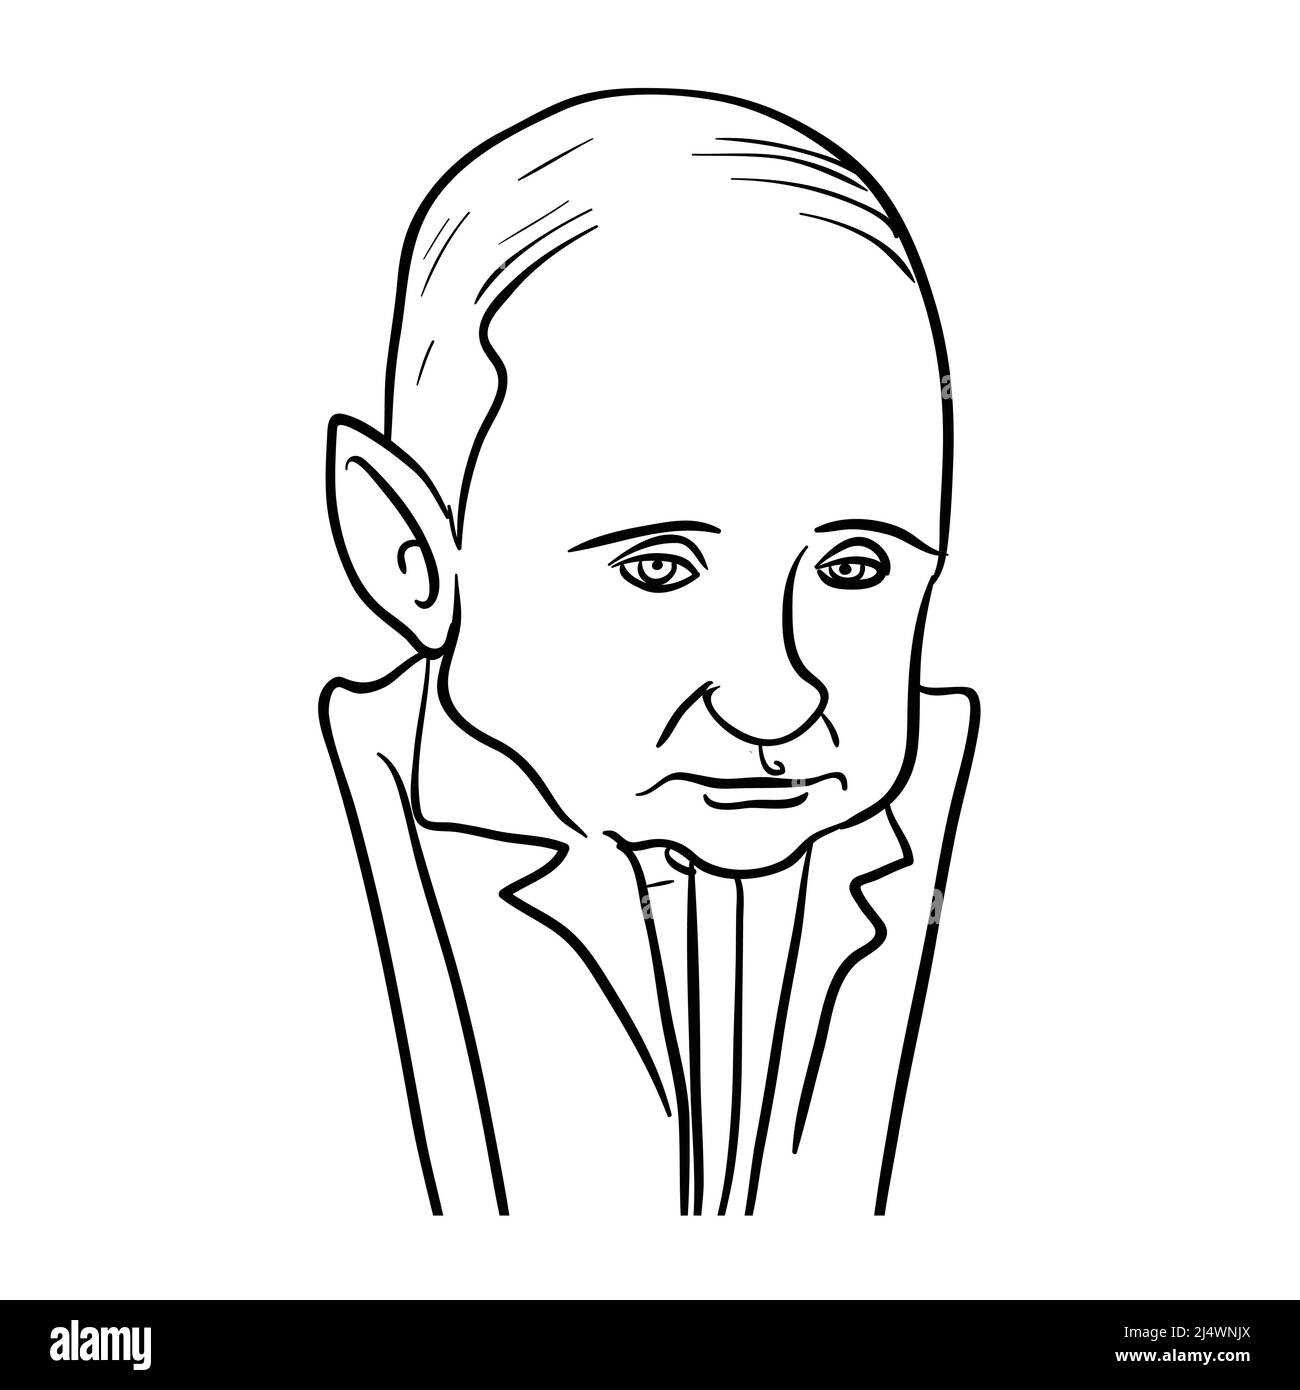 Vladimir Putin-caricature-line art , Vladimir Putin Caricature Illustration Stock Vector